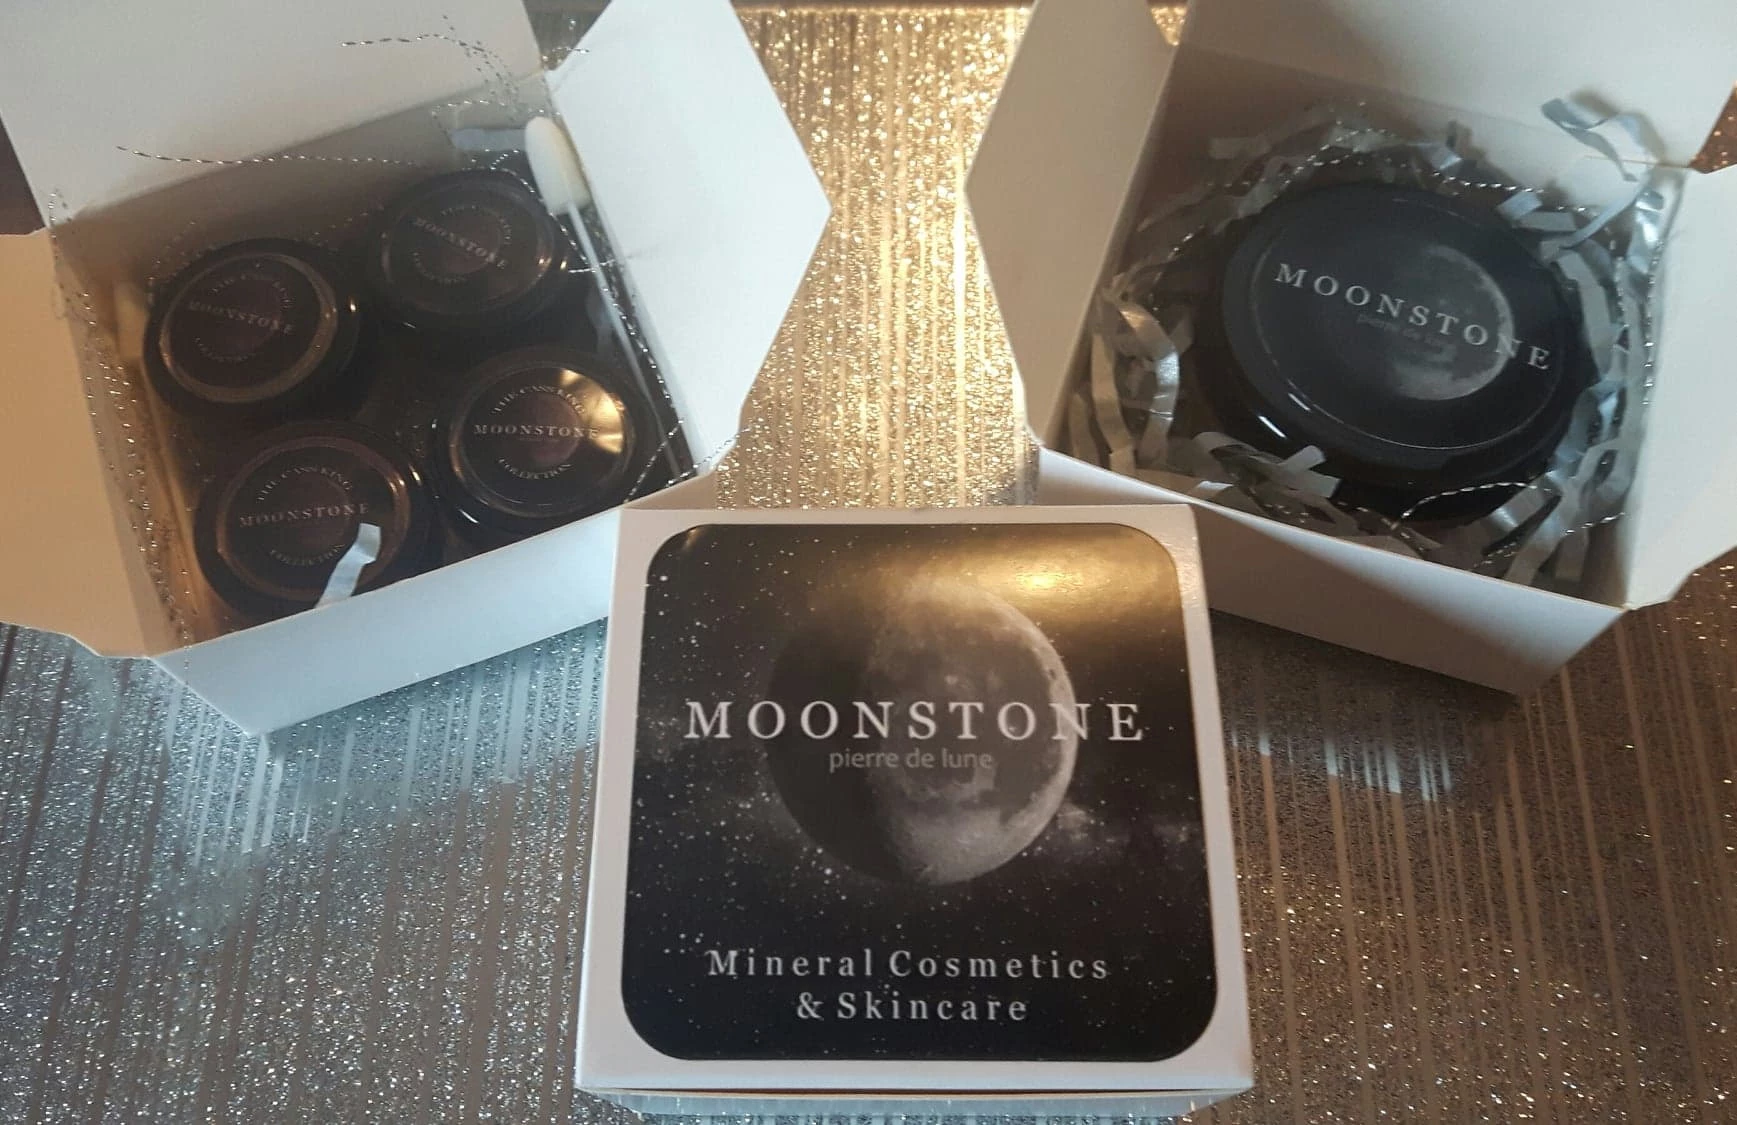 Moonstone makeup range